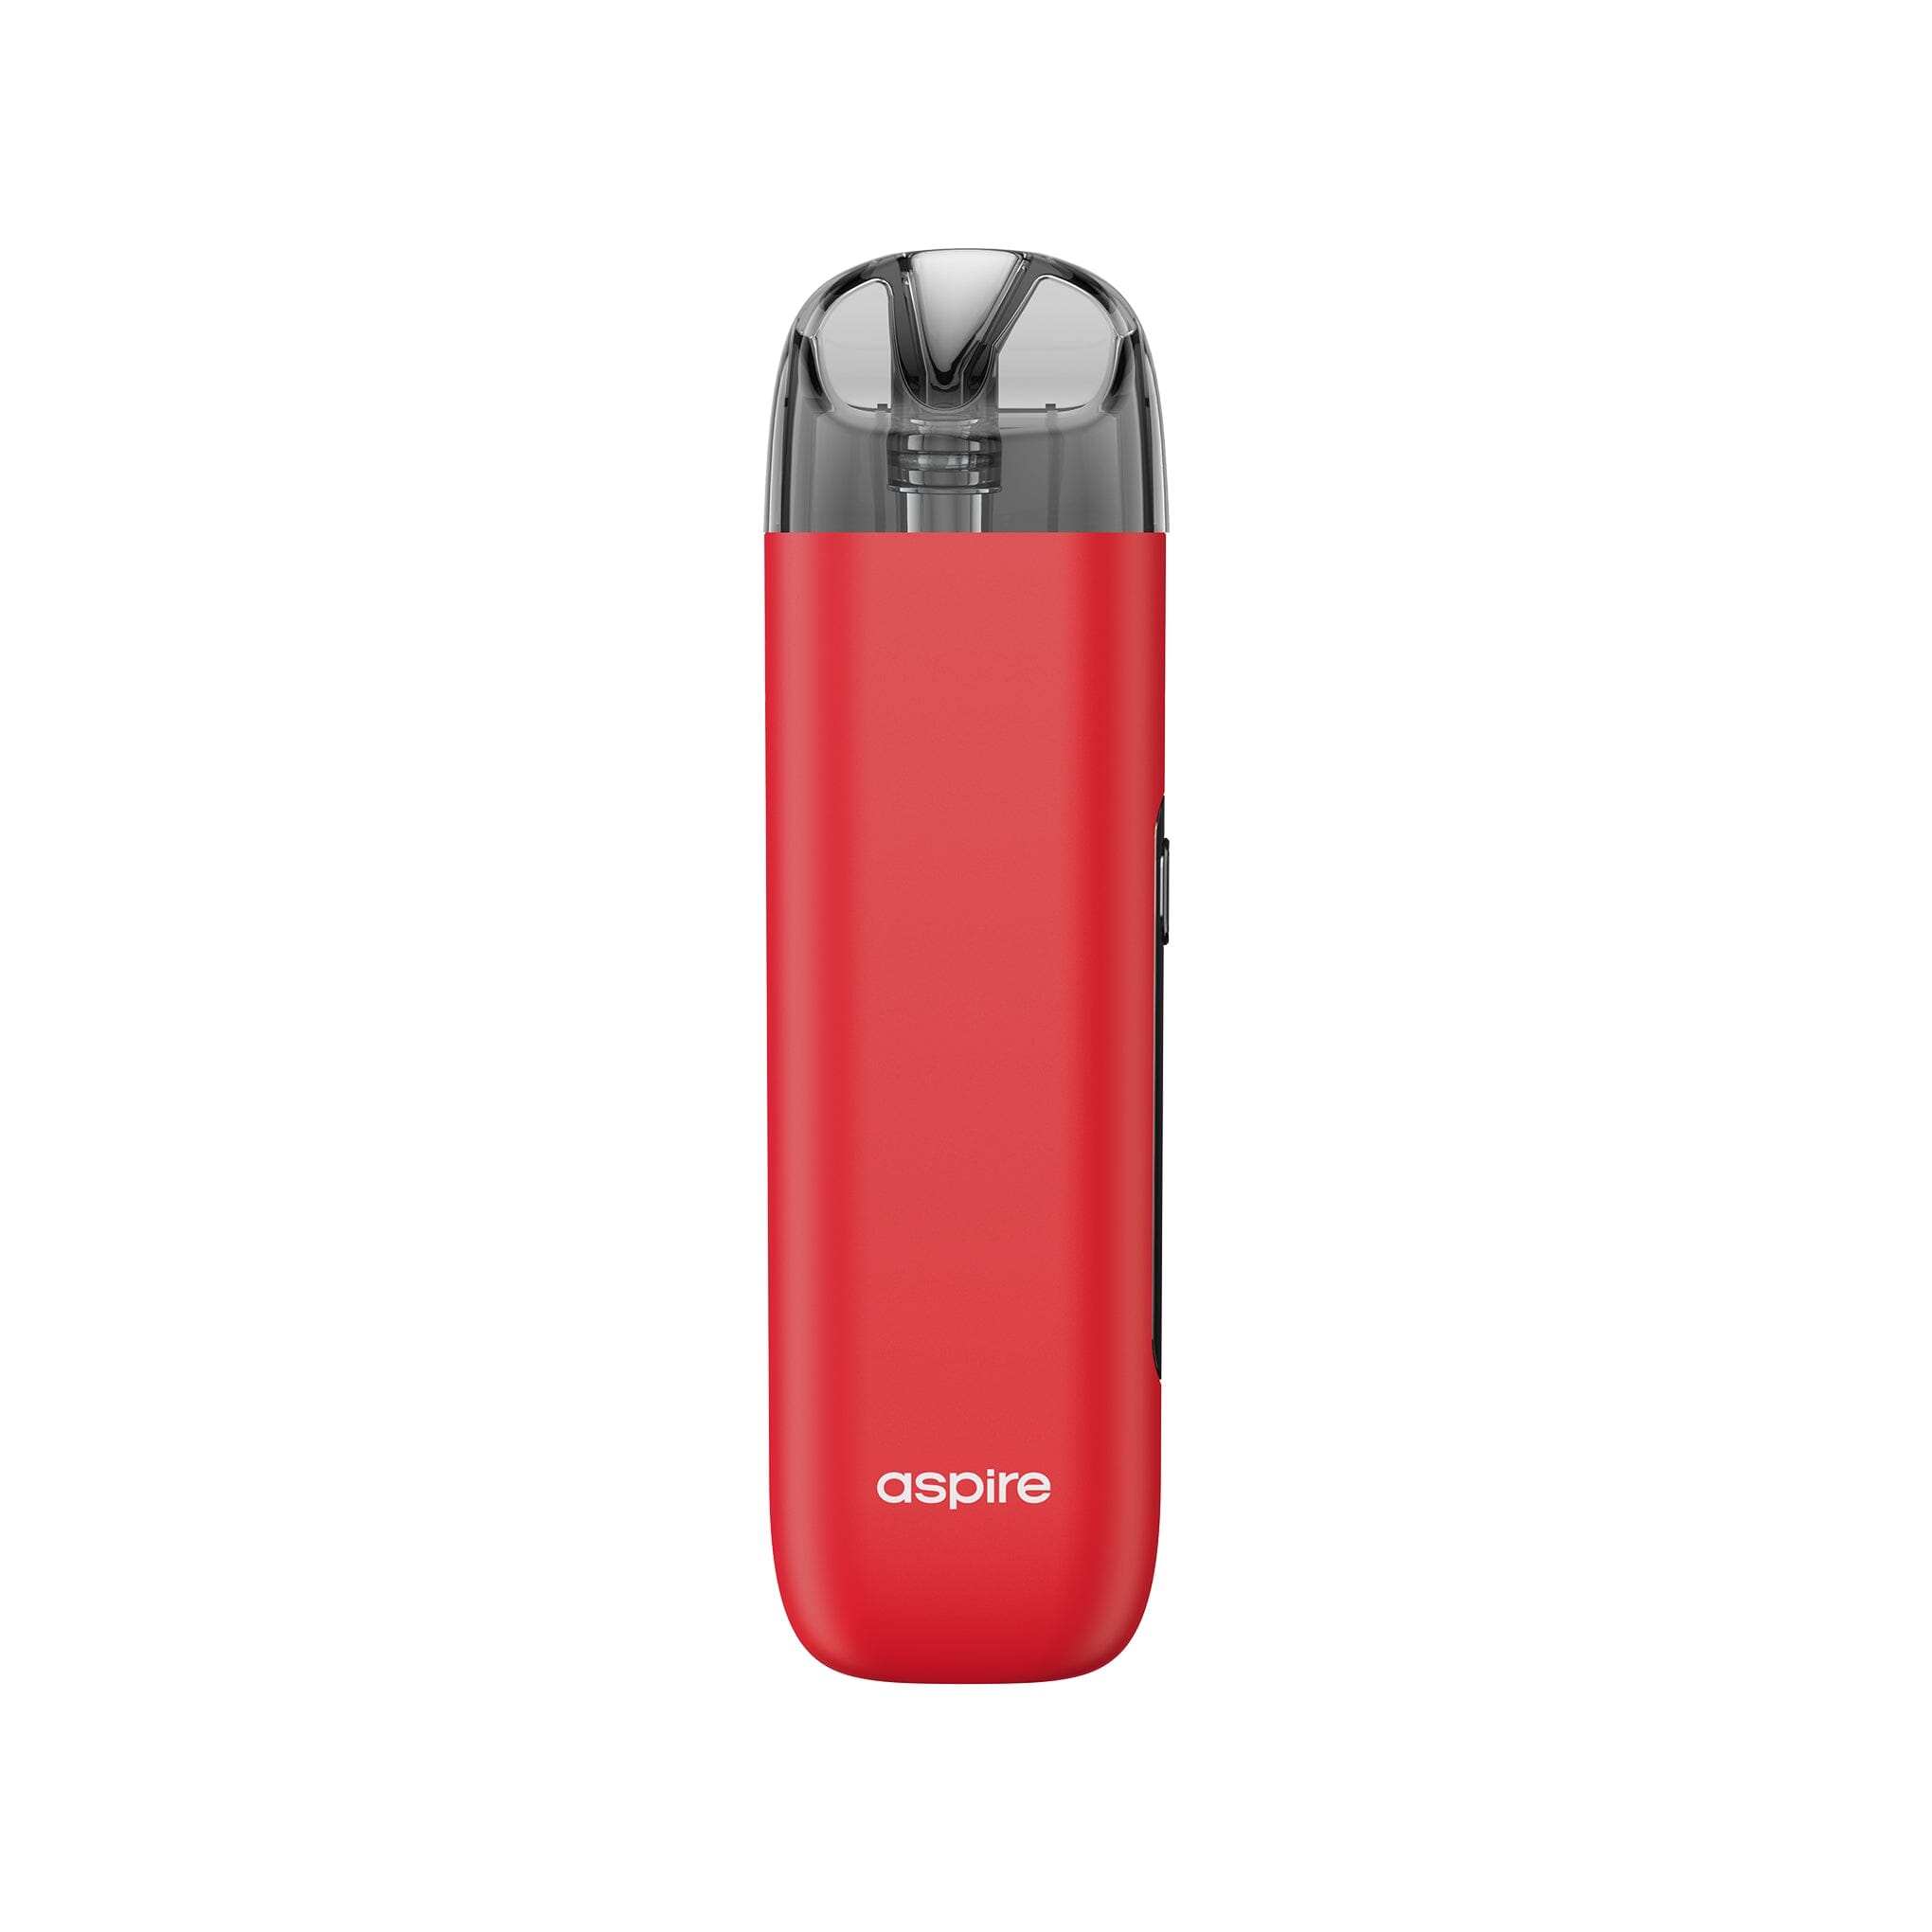 Aspire Minican 3 Pro Kit Pinkish Red 